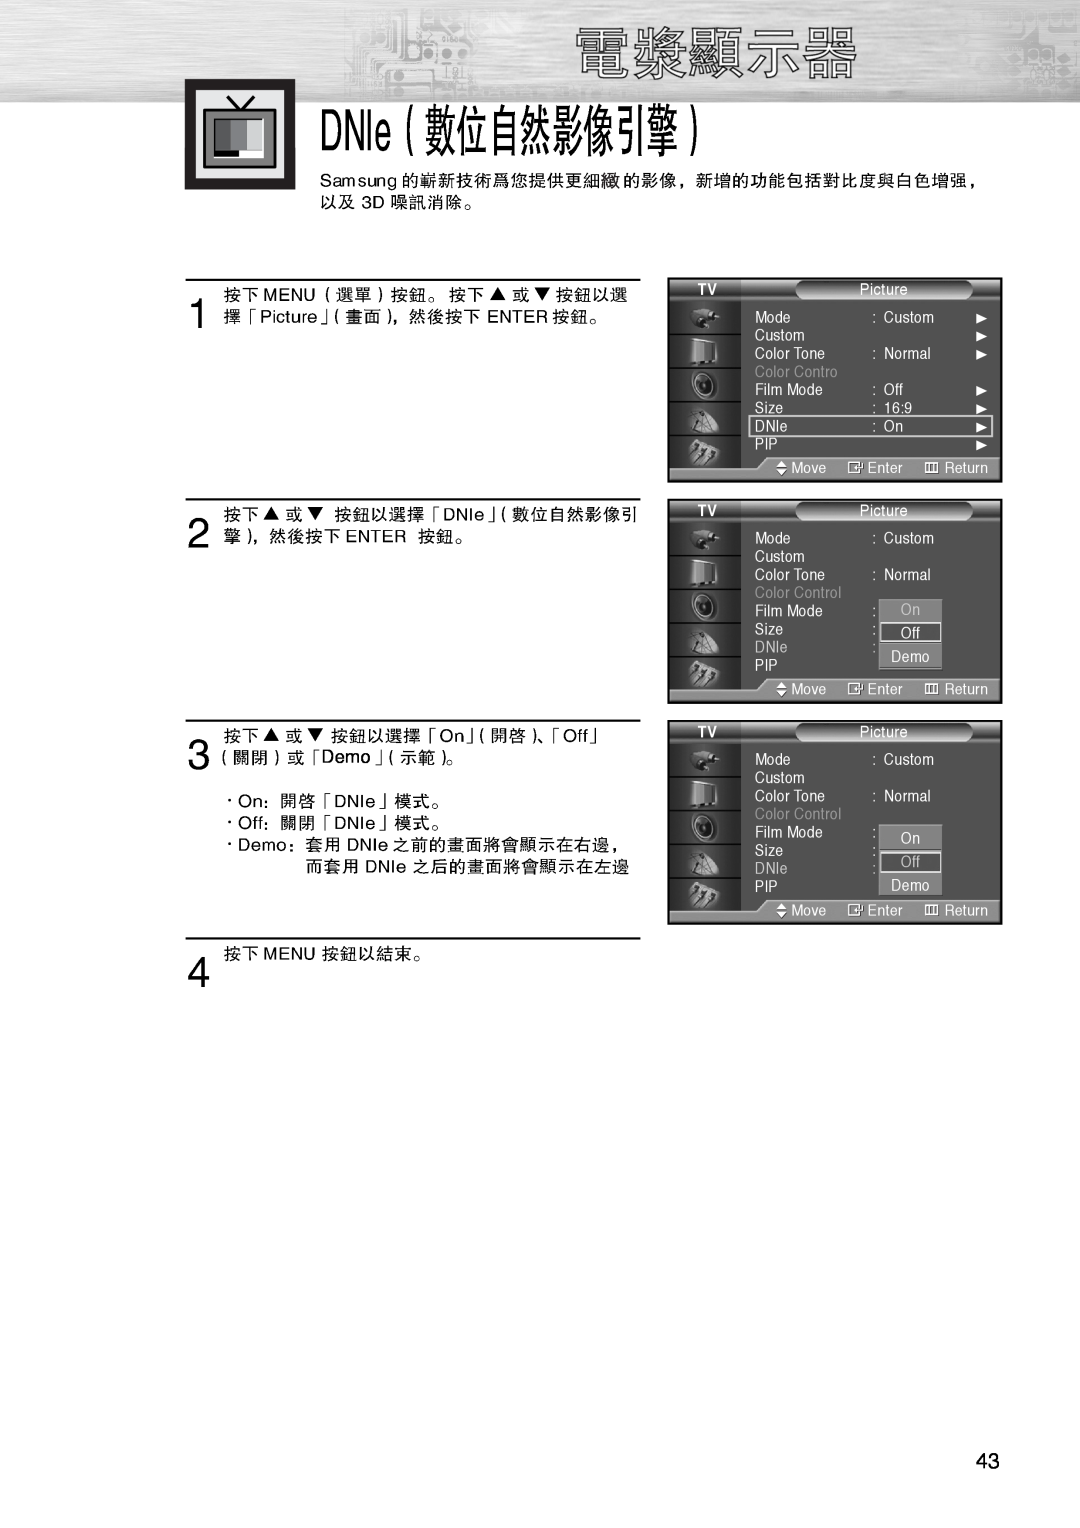 Samsung PL-42D4S manual Color Control, DNIe, OnOff 